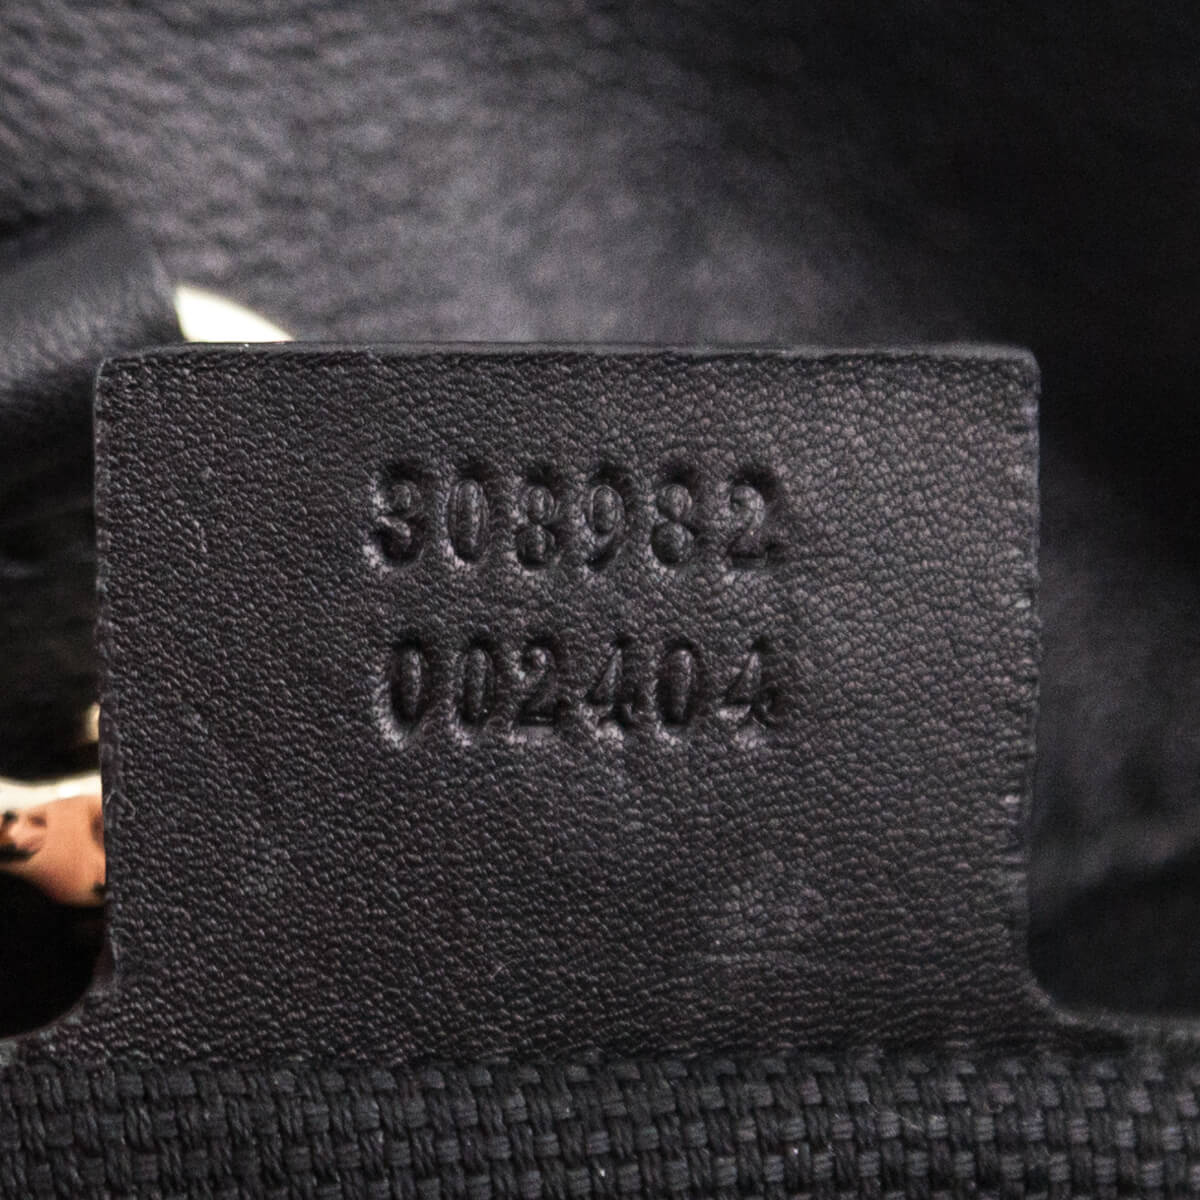 Gucci Black Patent Medium Soho Chain Bag - Luxury Bags Canada